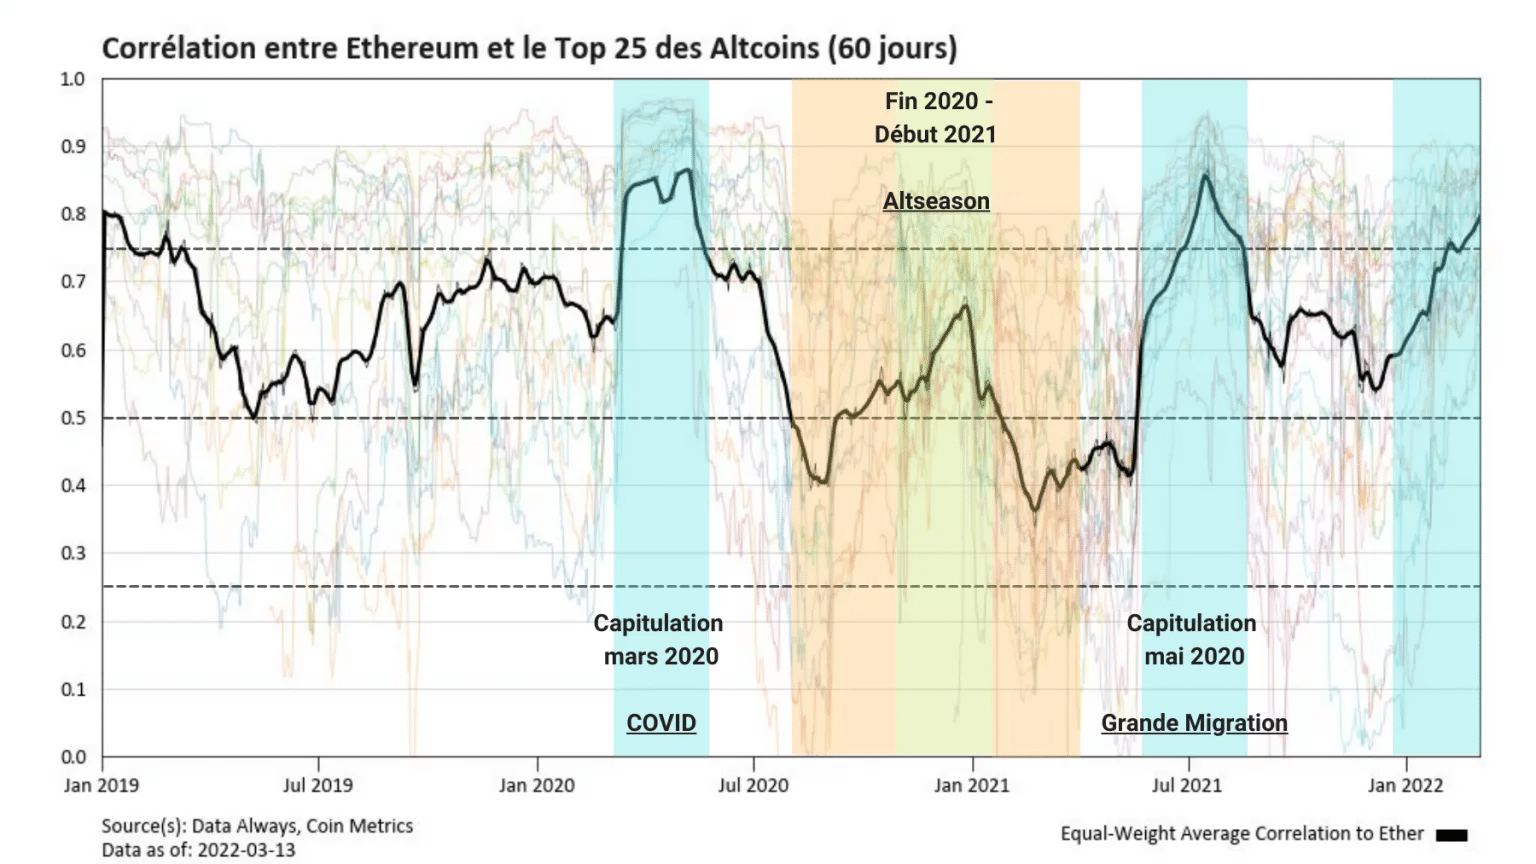 Figure 4: Correlation between ETH and Top 25 altcoins